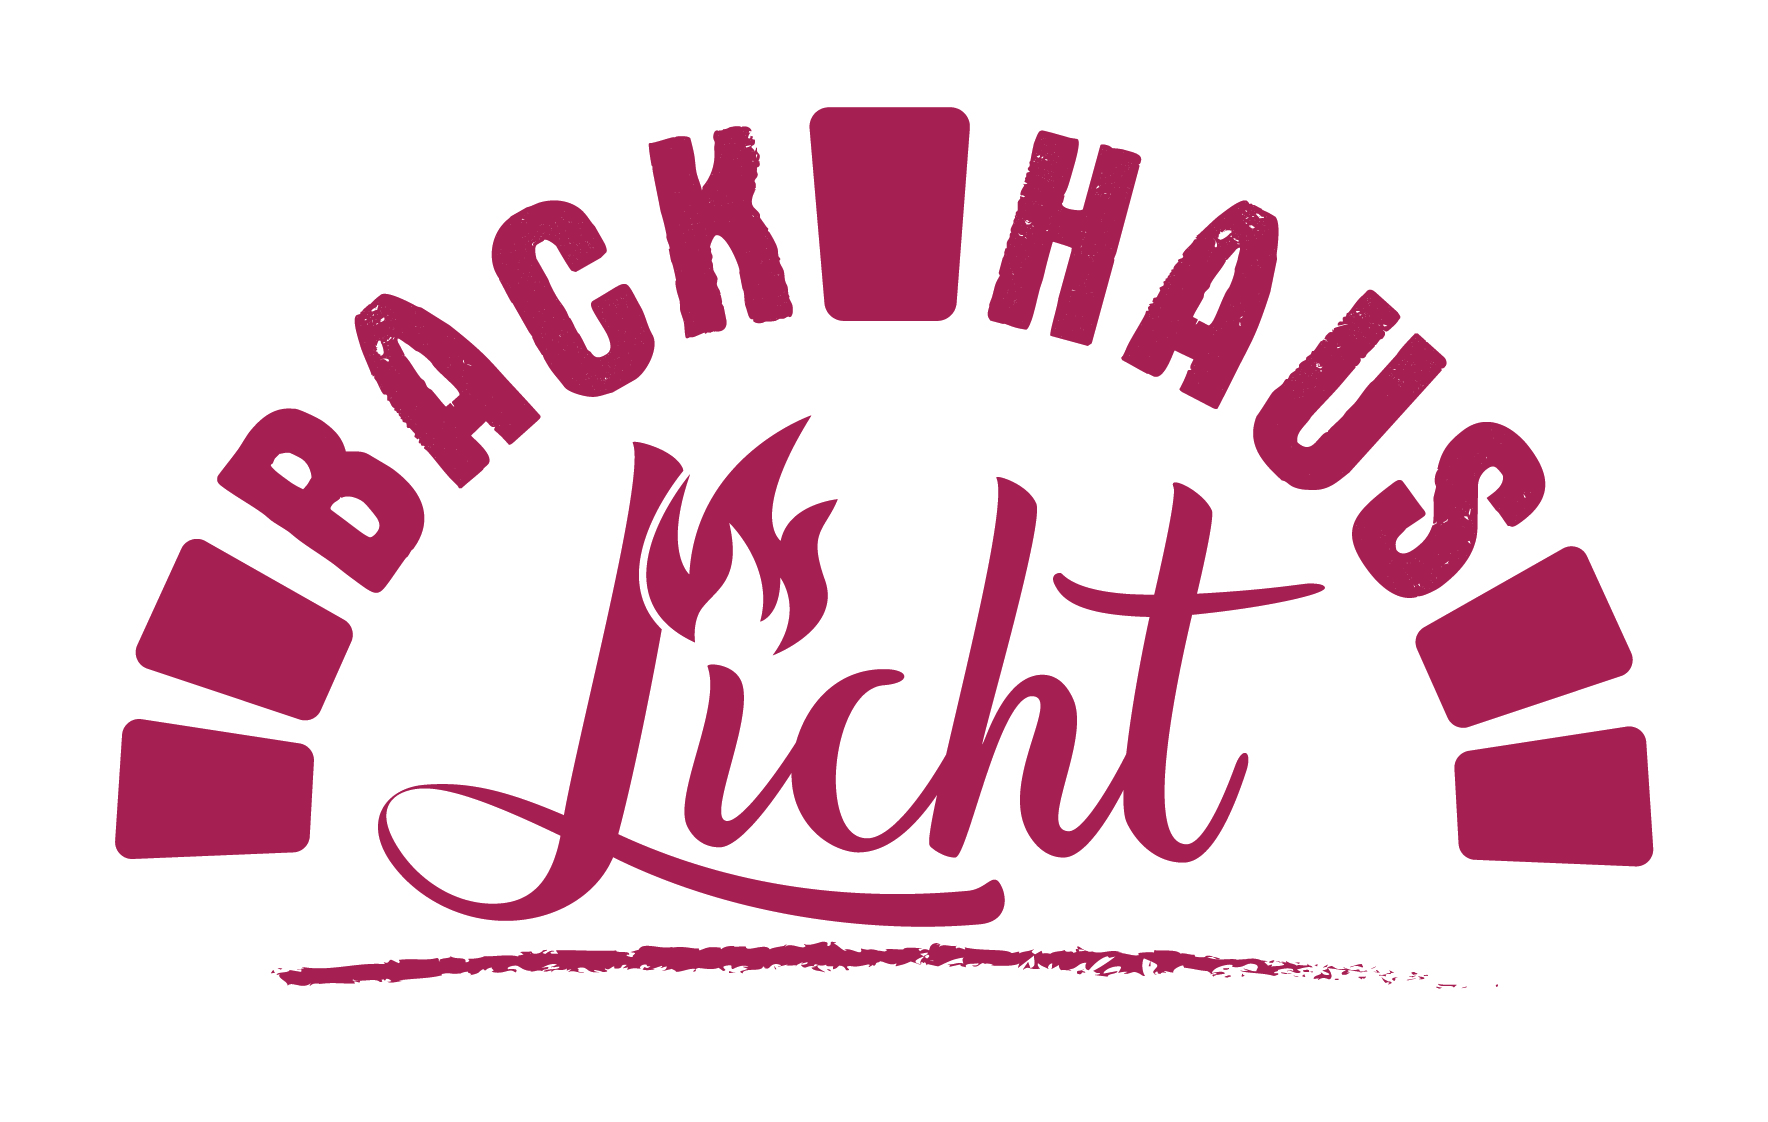 Backhaus Licht GmbH